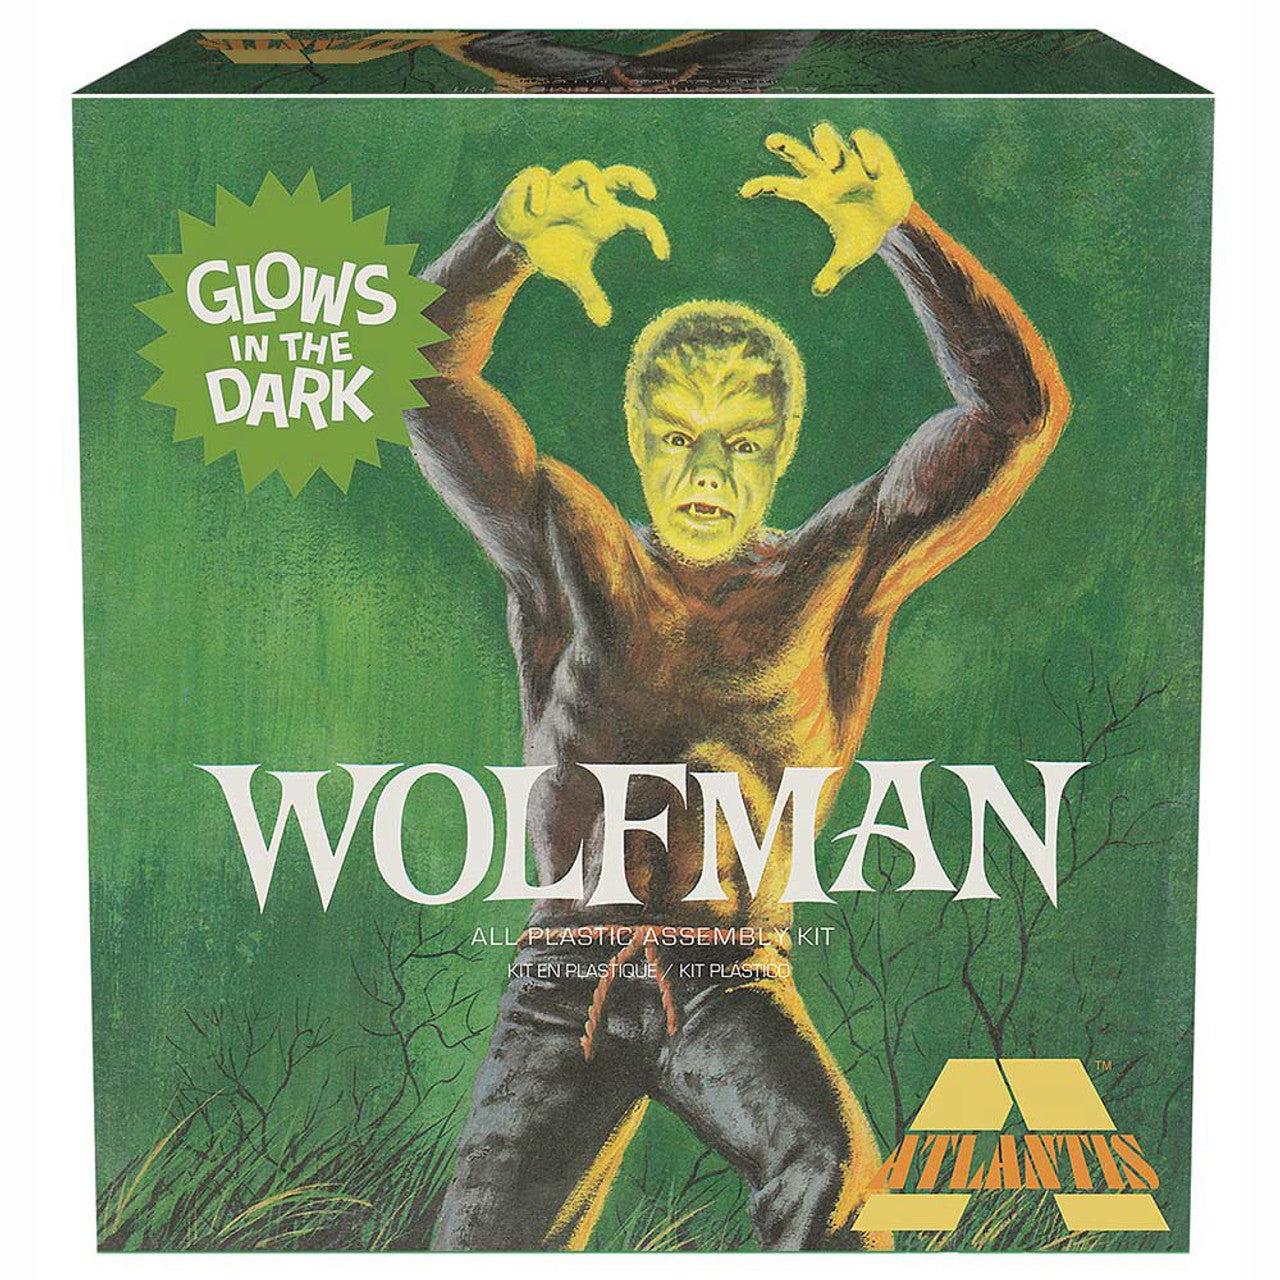 Atlantis Models A450 1:8 Wolfman Glow-in-the-Dark Plastic Figure Kit